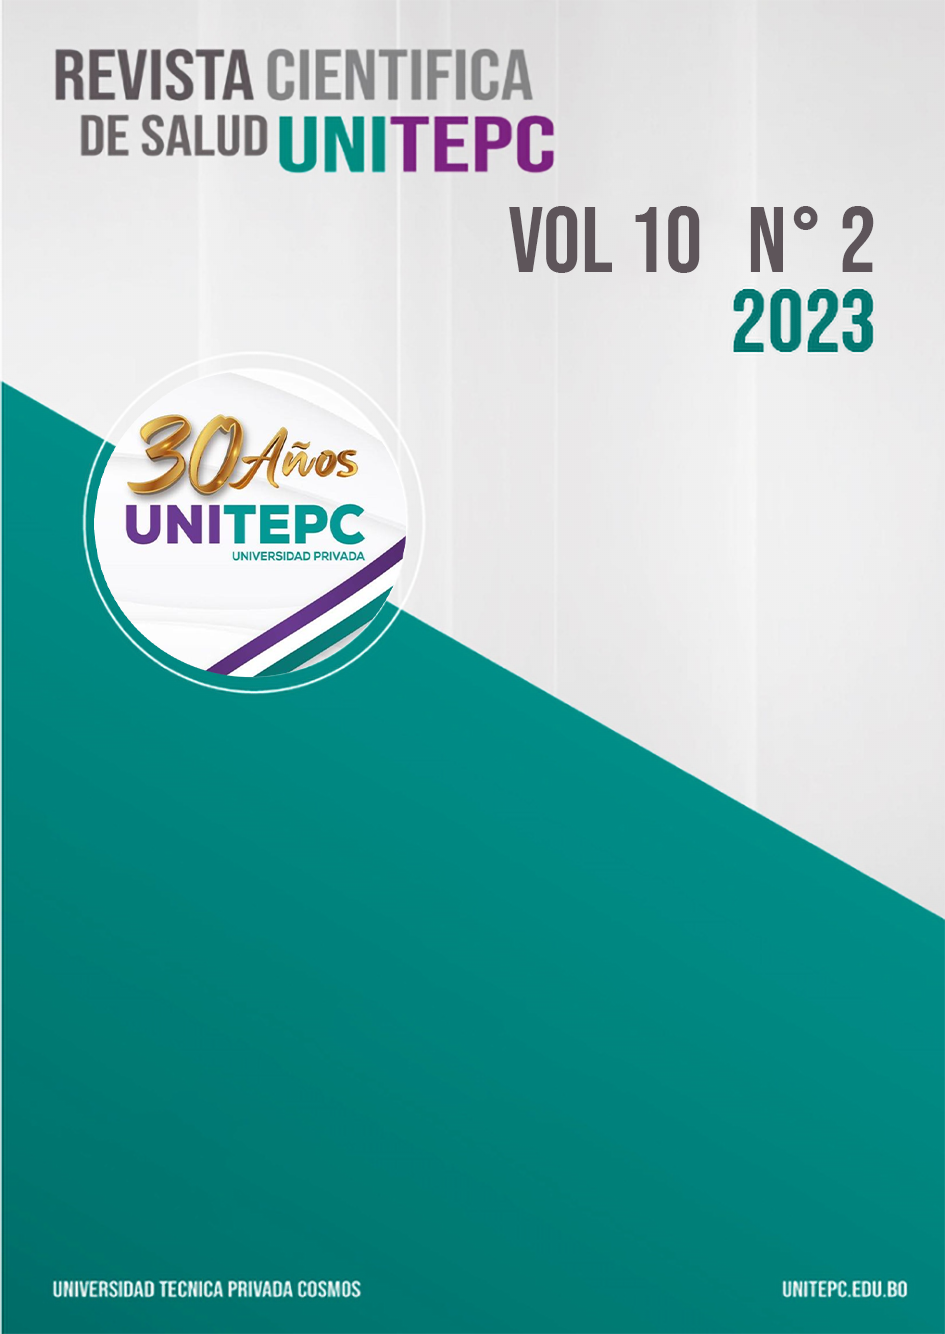 					Ver Vol. 10 Núm. 2 (2023): Revista Científica de Salud UNITEPC 
				